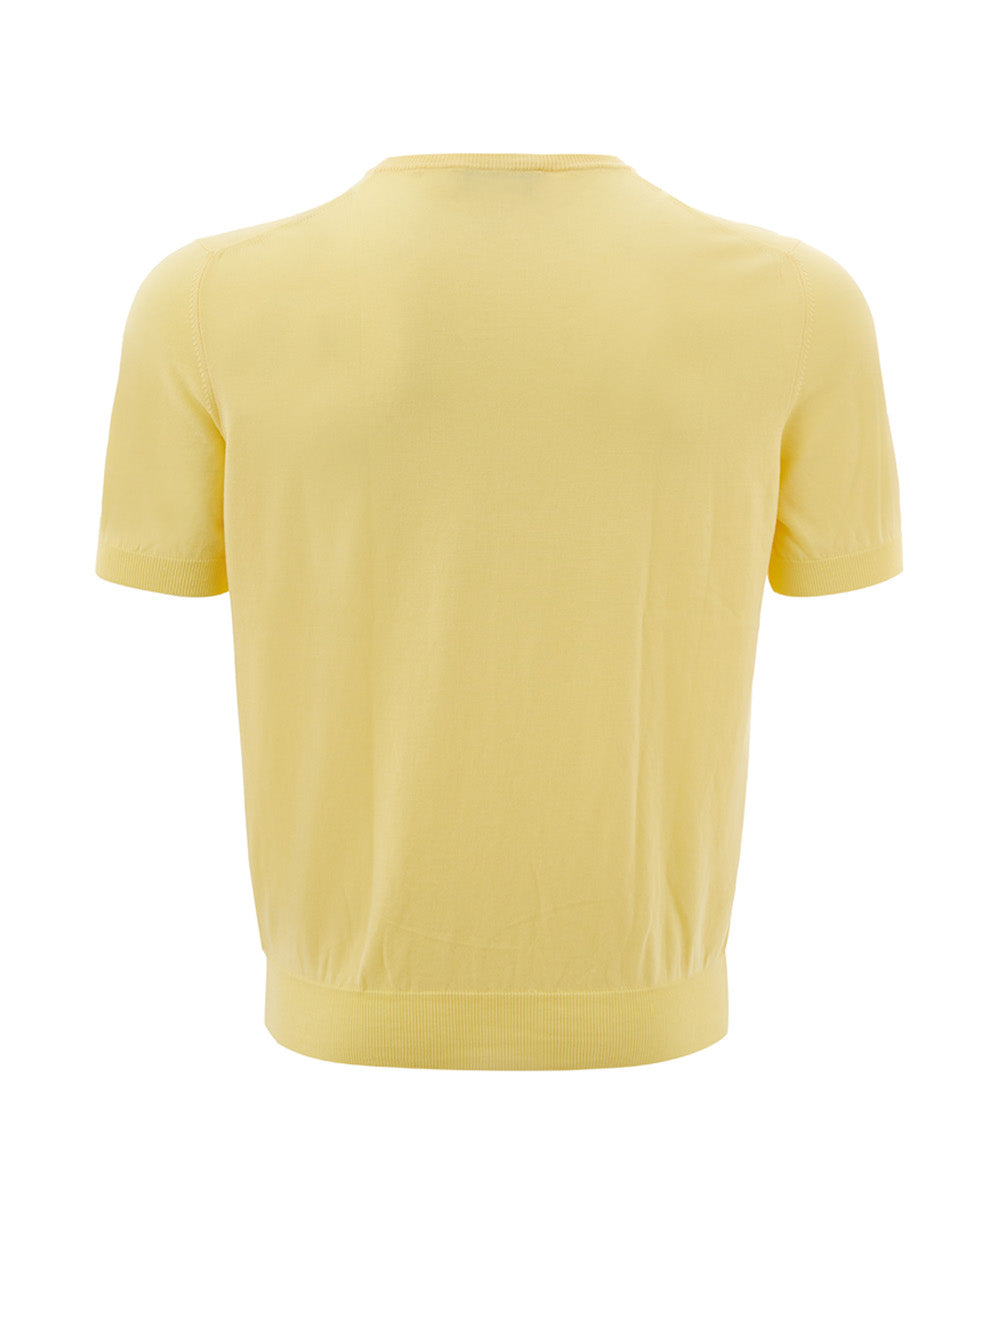 Round neck Cotton Yellow T-Shirt